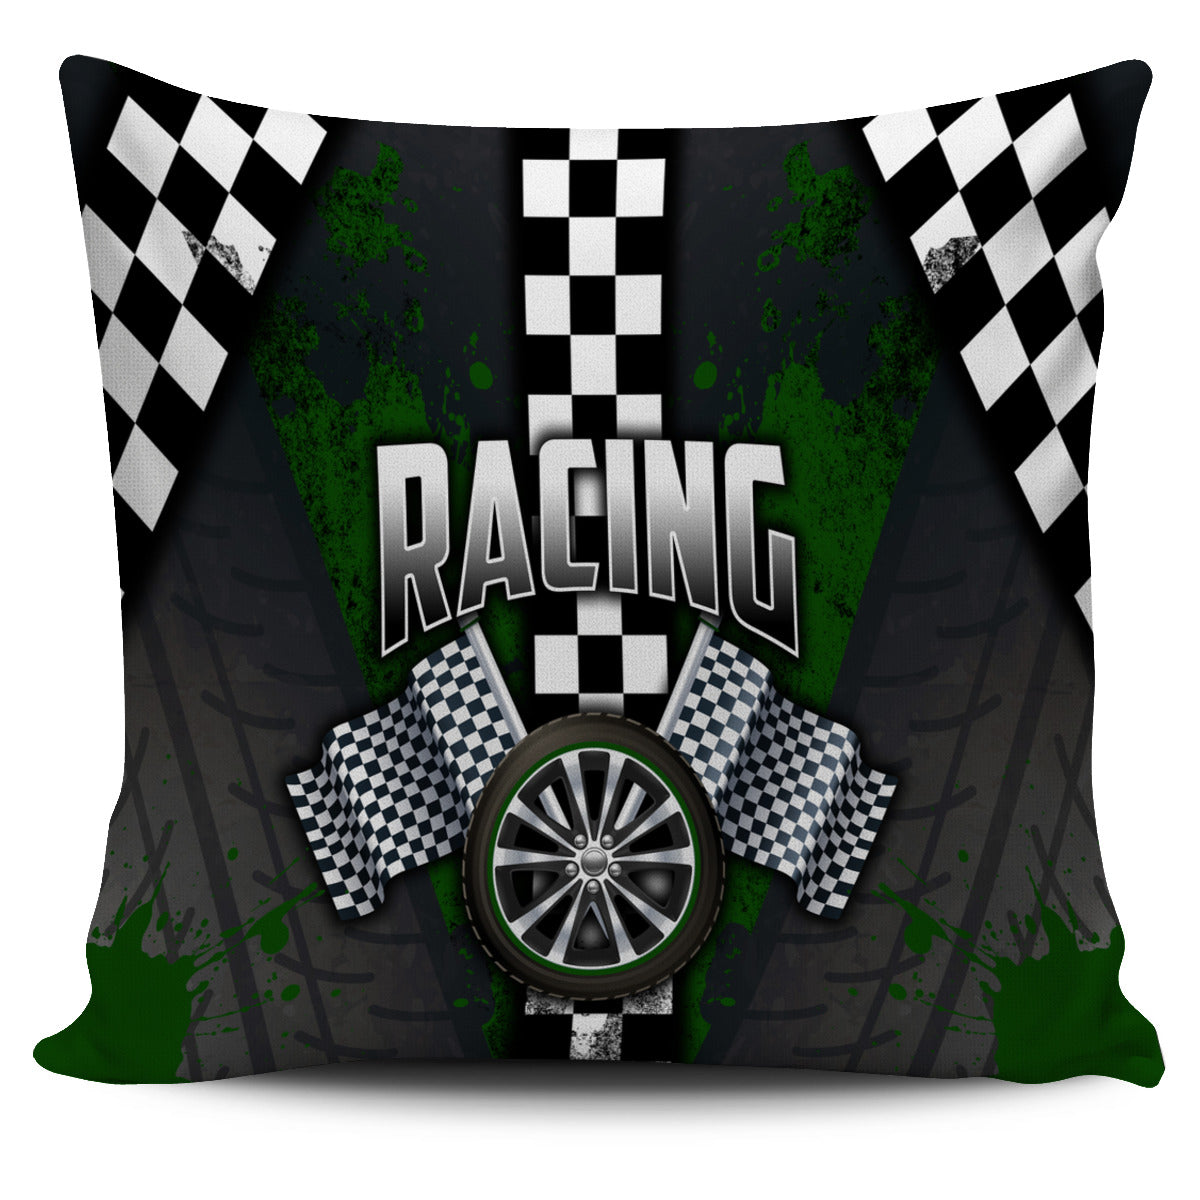 Racing Pillow Cover Green